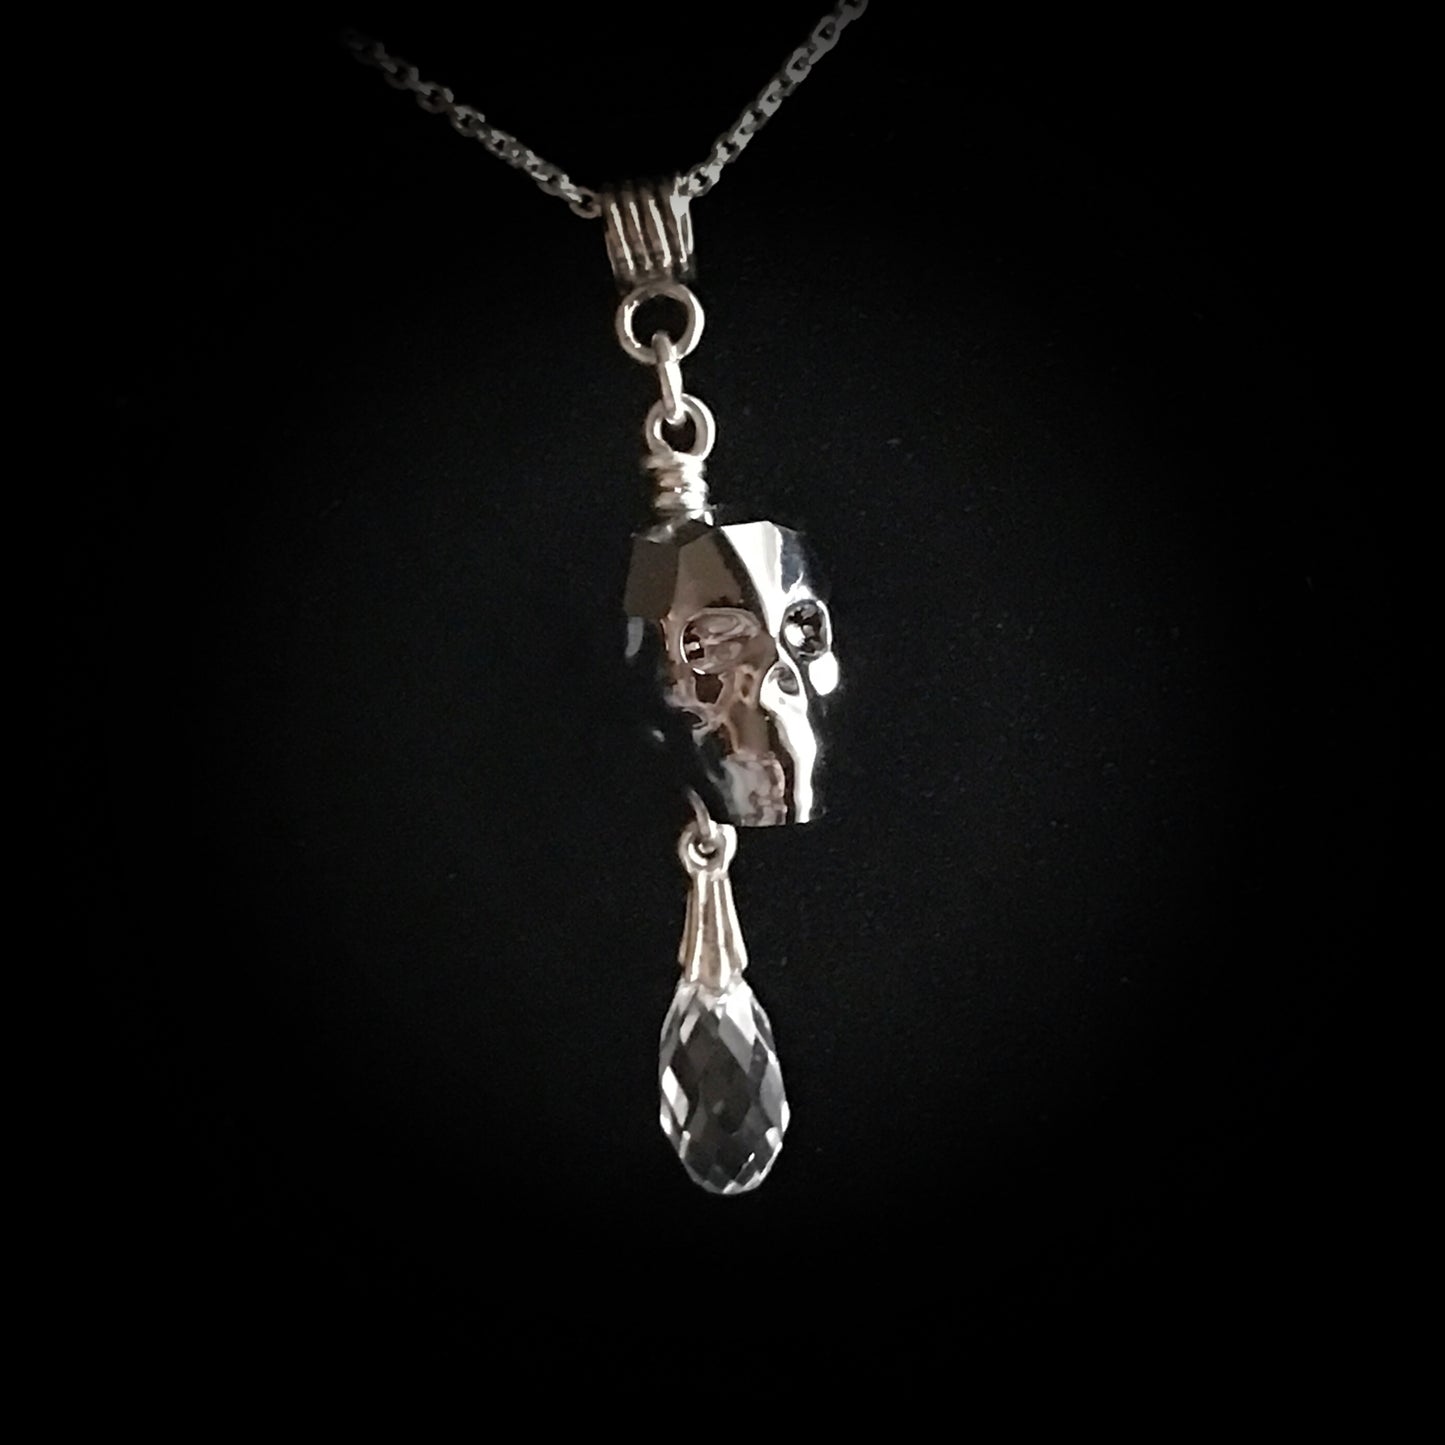 Swarovski Crystal Totem Necklace